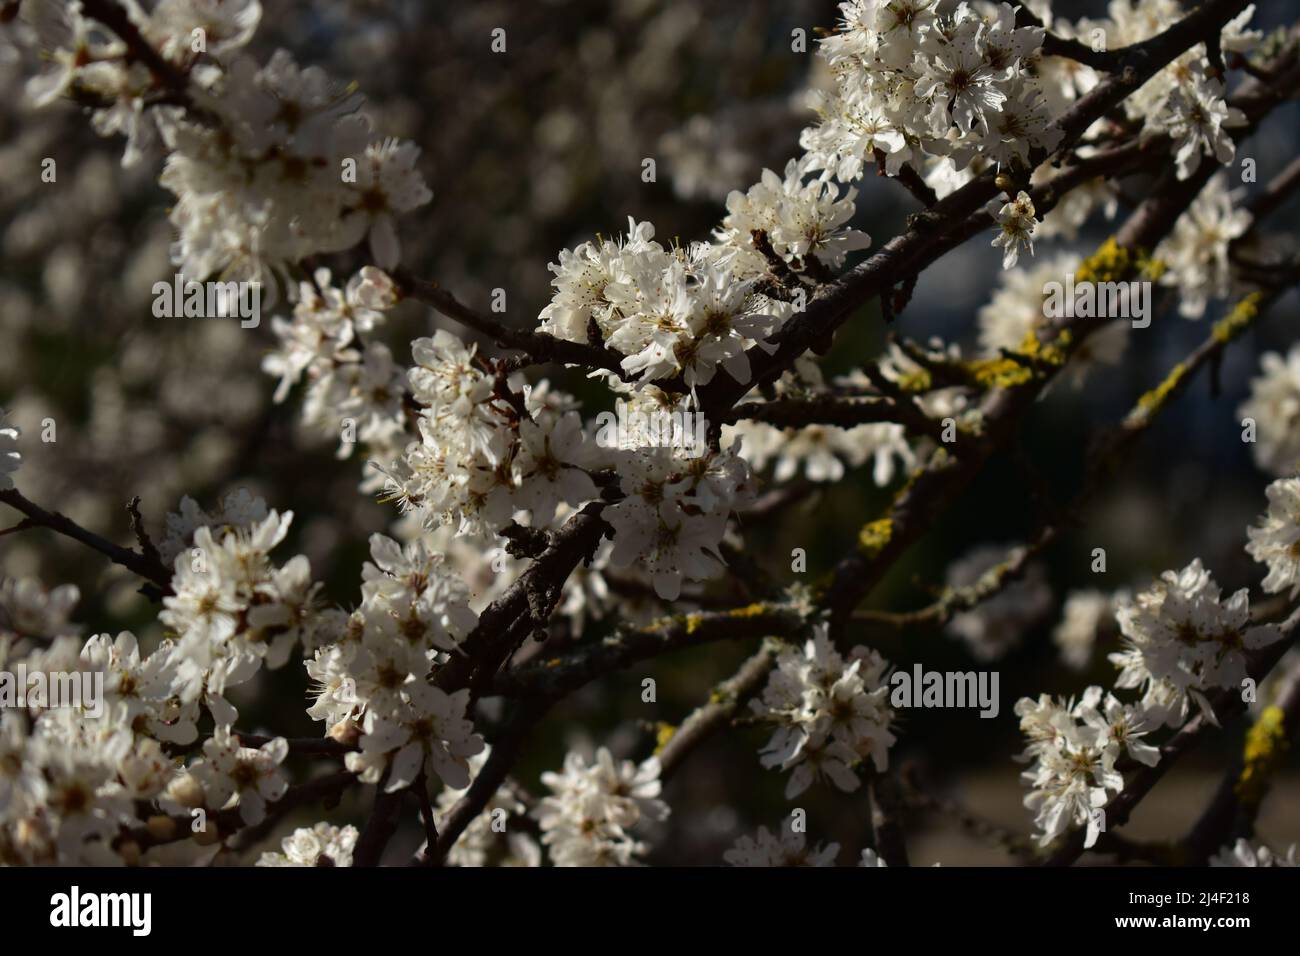 Mandelblüte, Blüten, Mandelbaum, Kirschblüte,, Frühling, flor, flor, almendra, flor de cerezas, Belleza en la naturaleza, frescura, pureza Foto de stock